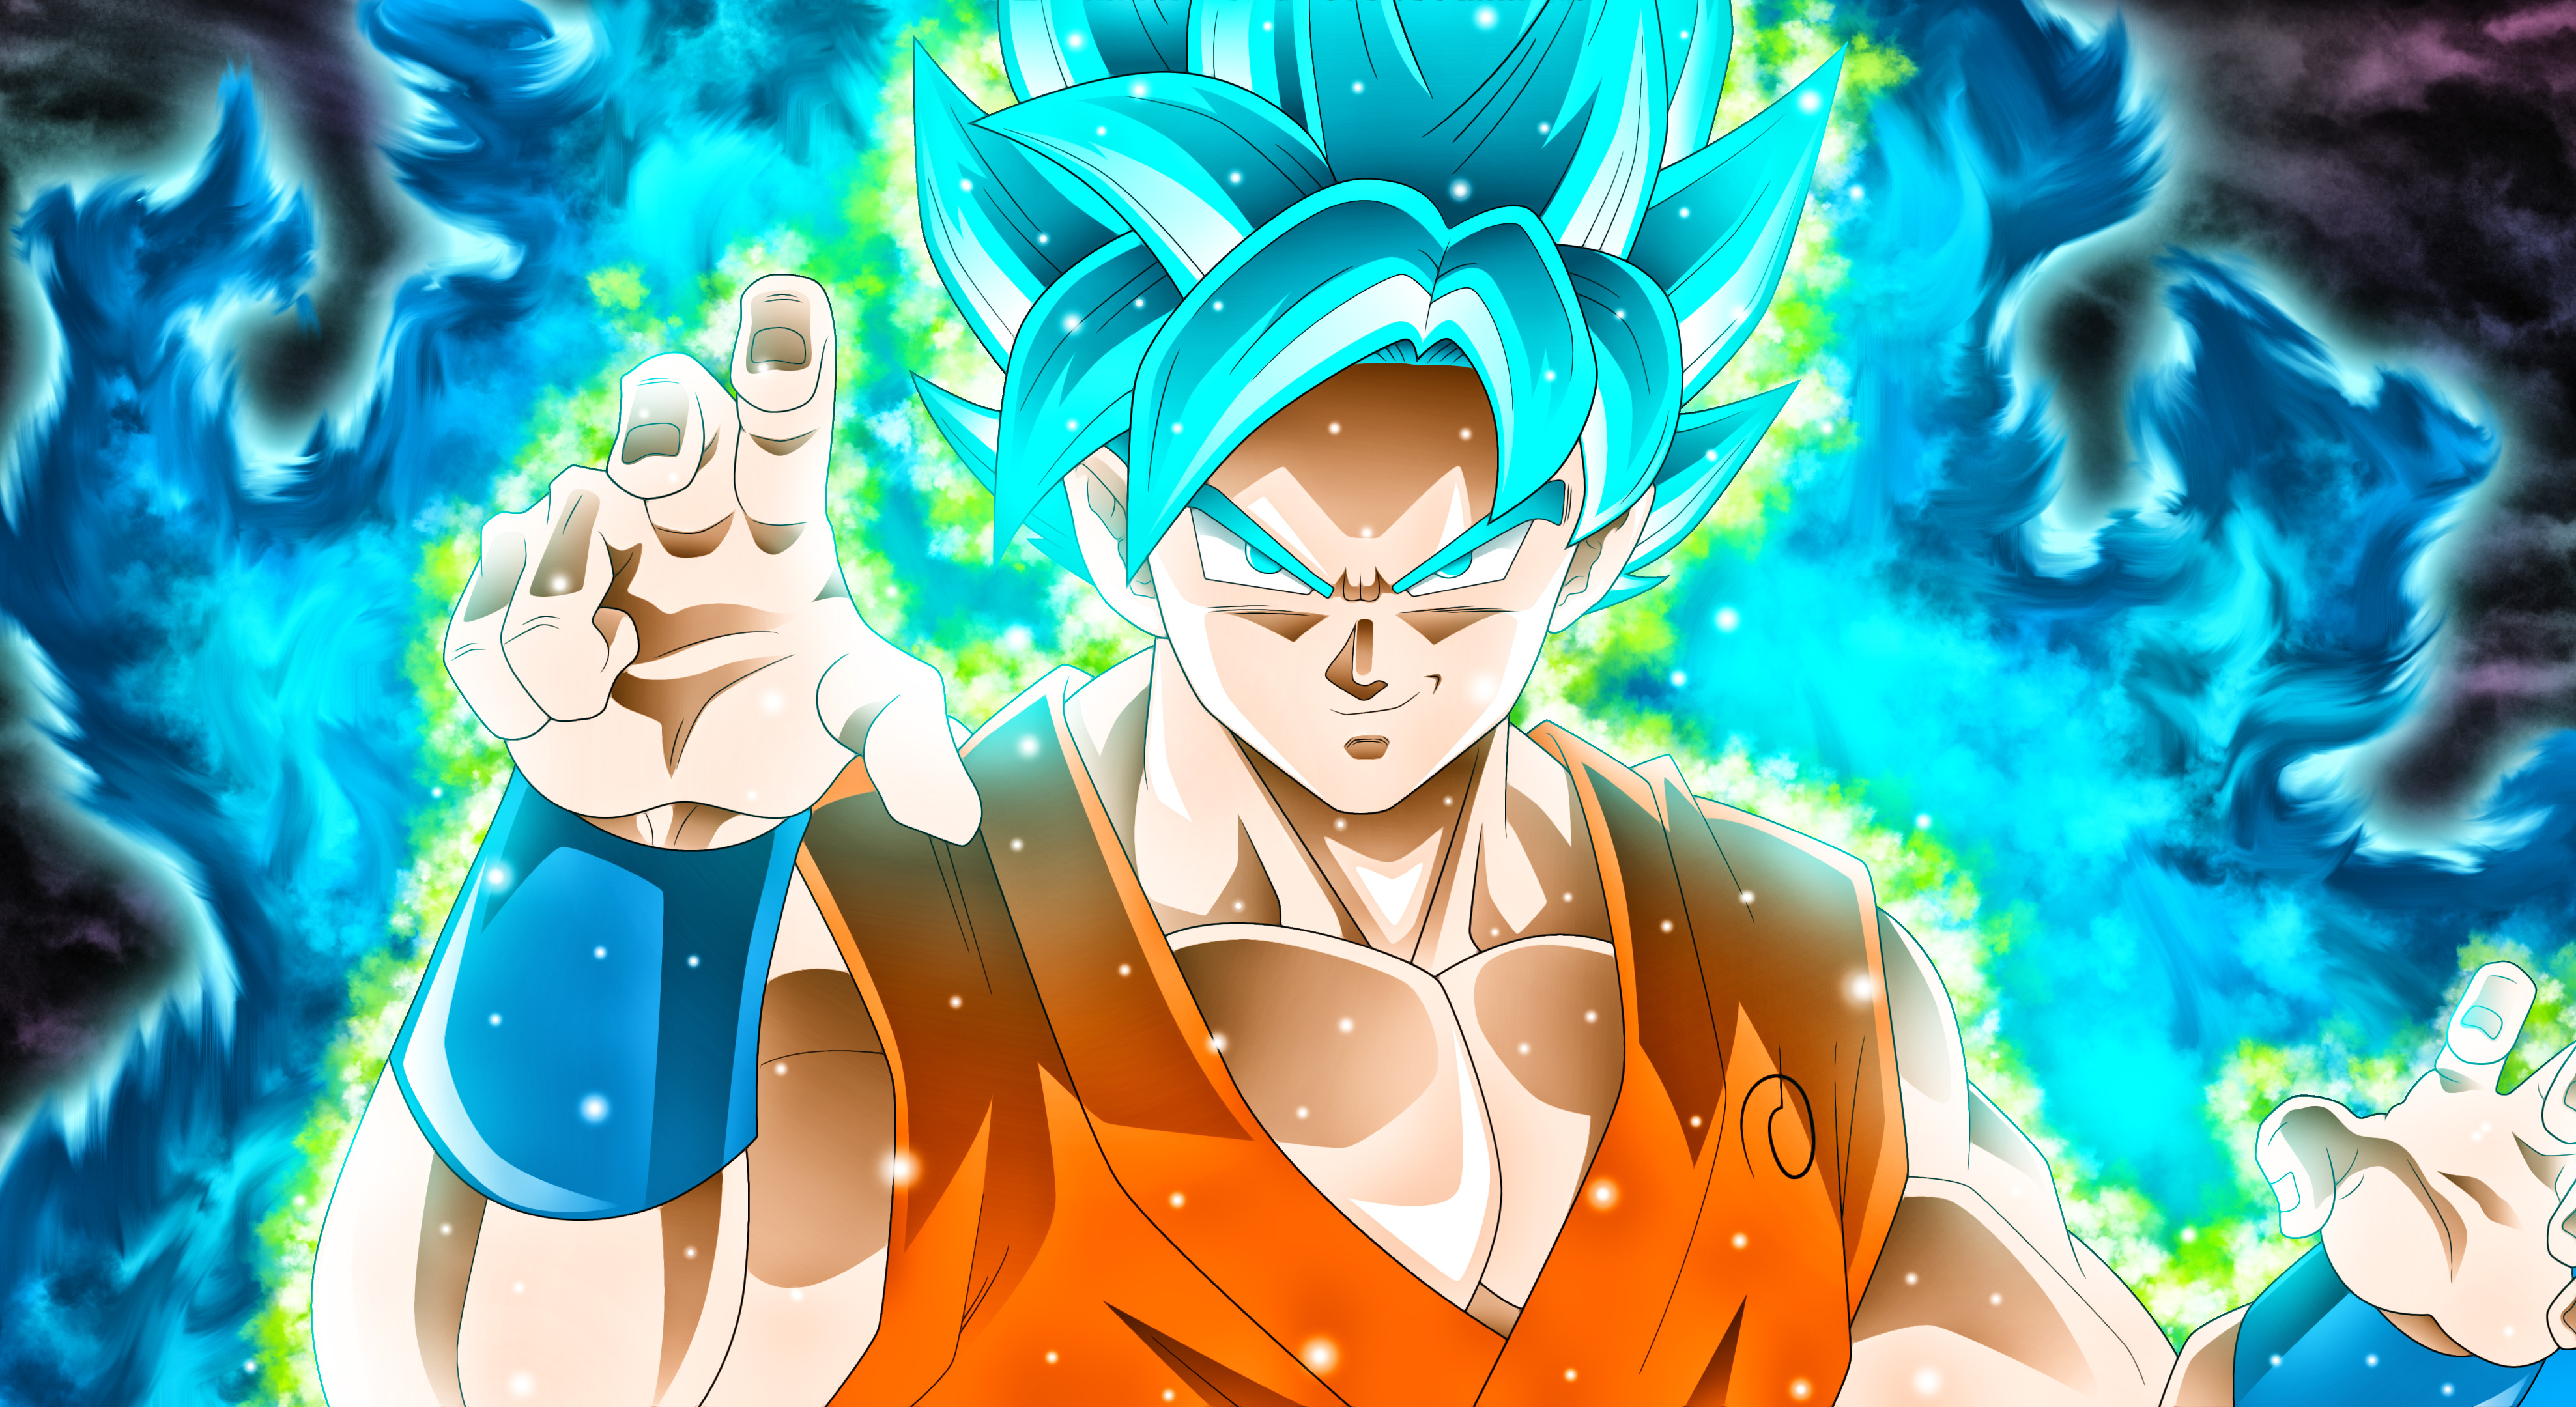 Goku Dragon Ball Super HD Anime 4k Wallpapers Images Backgrounds 